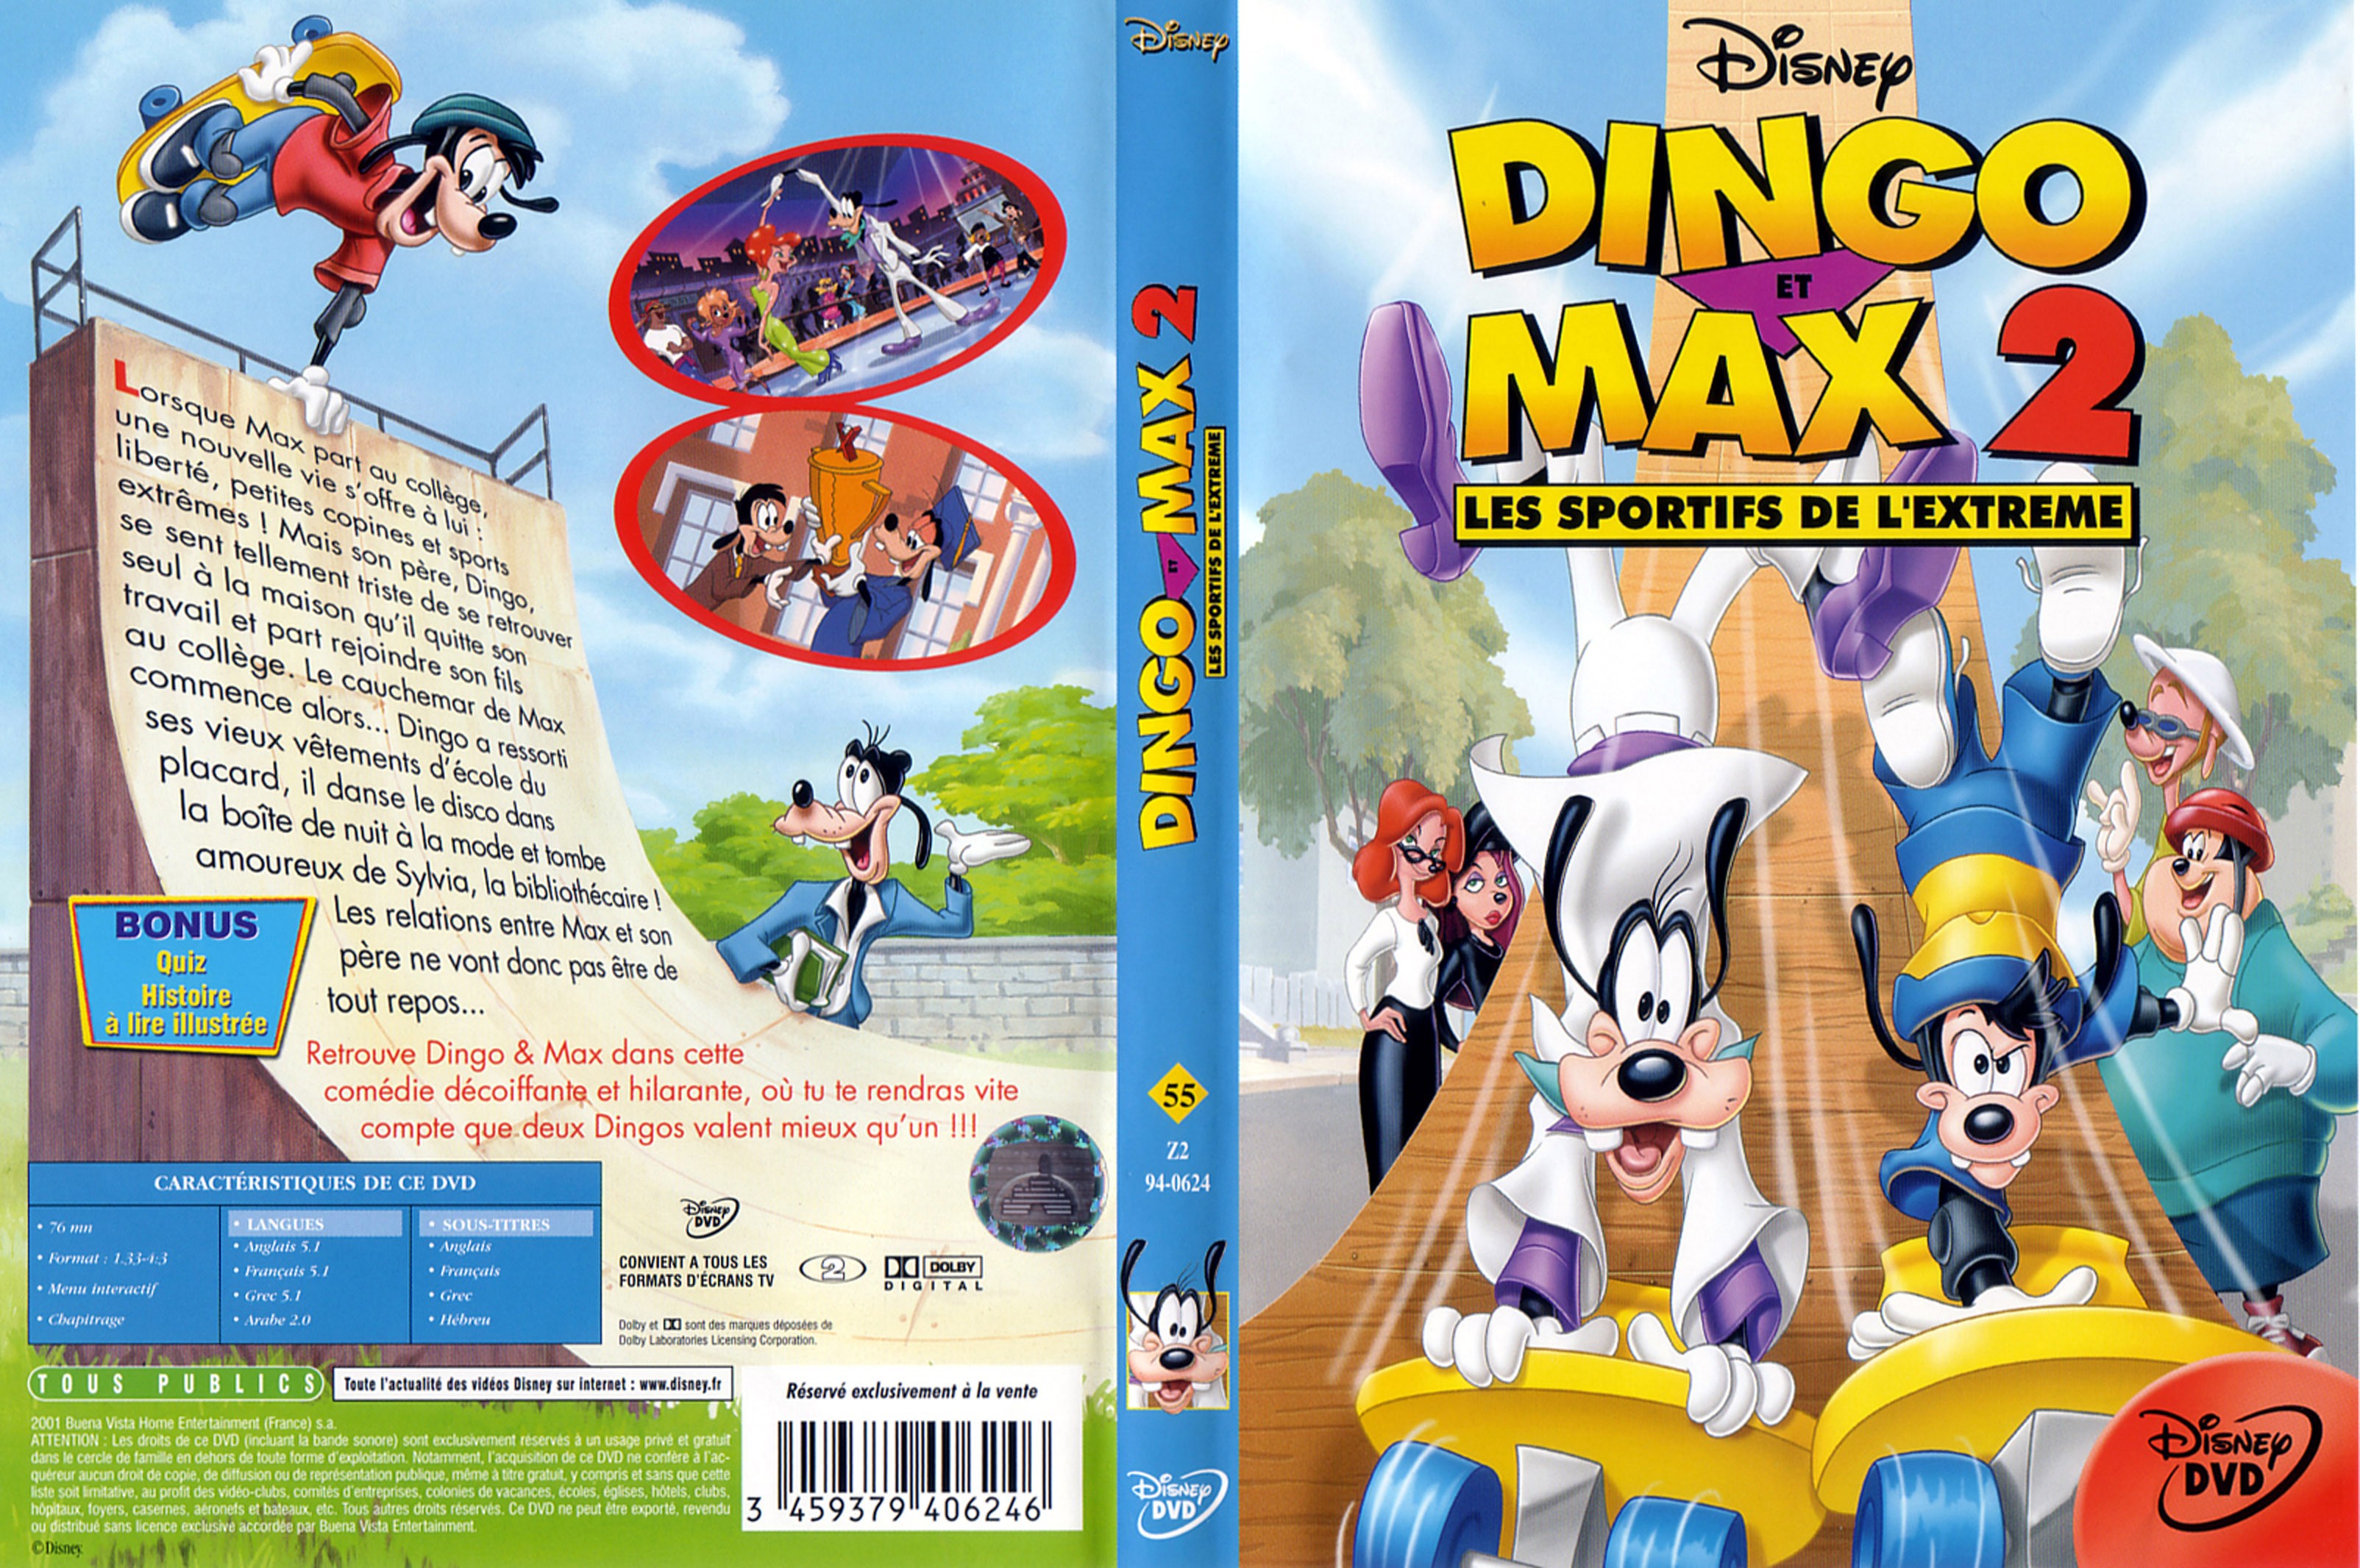 Jaquette DVD Dingo et Max 2 v2